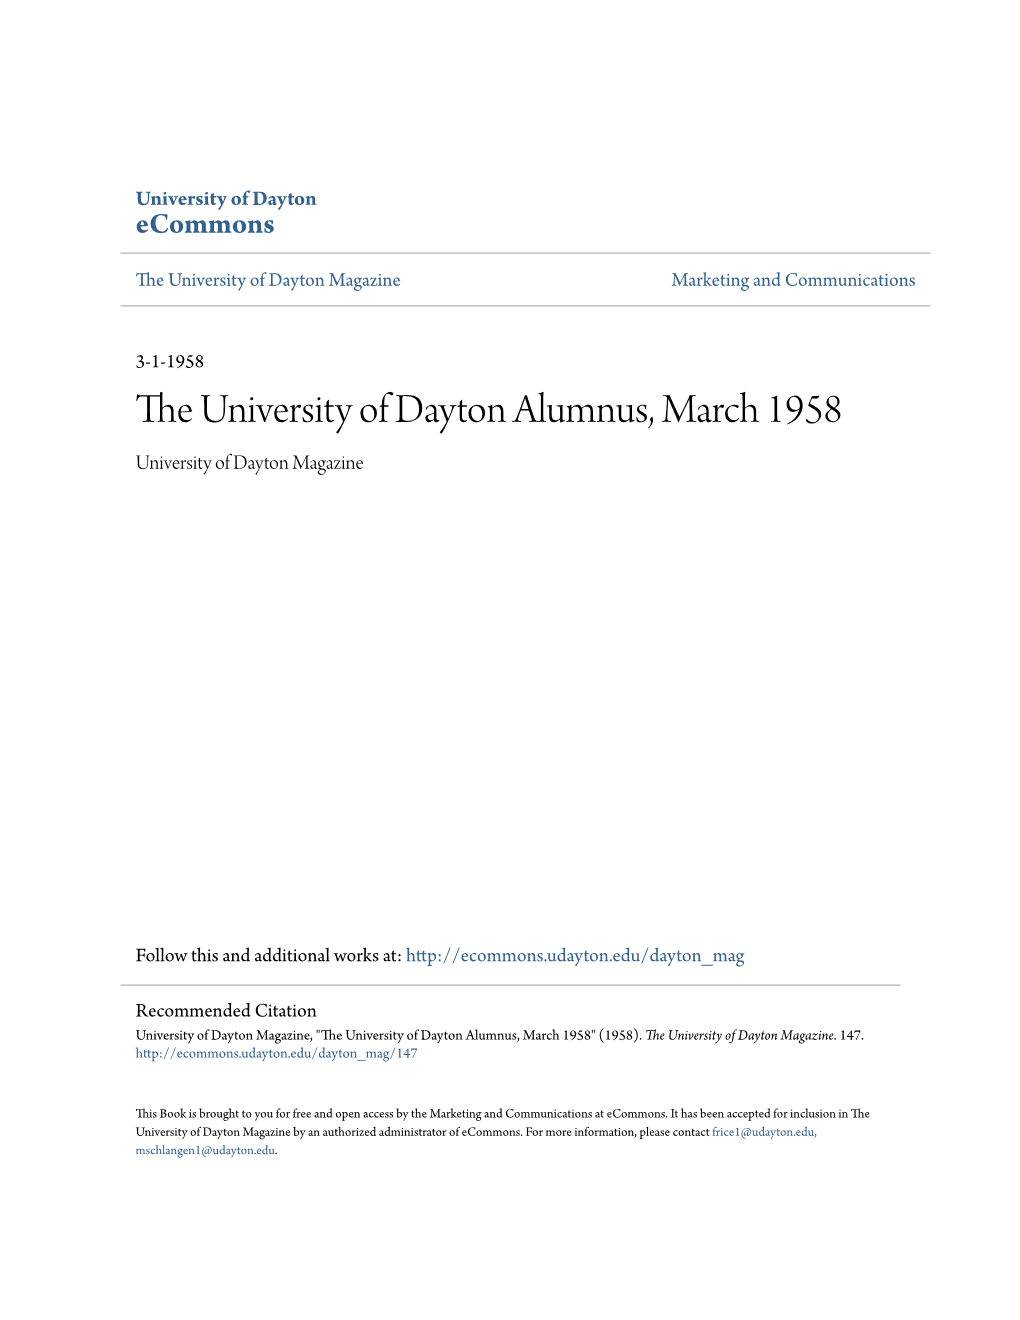 The University of Dayton Alumnus, March 1958